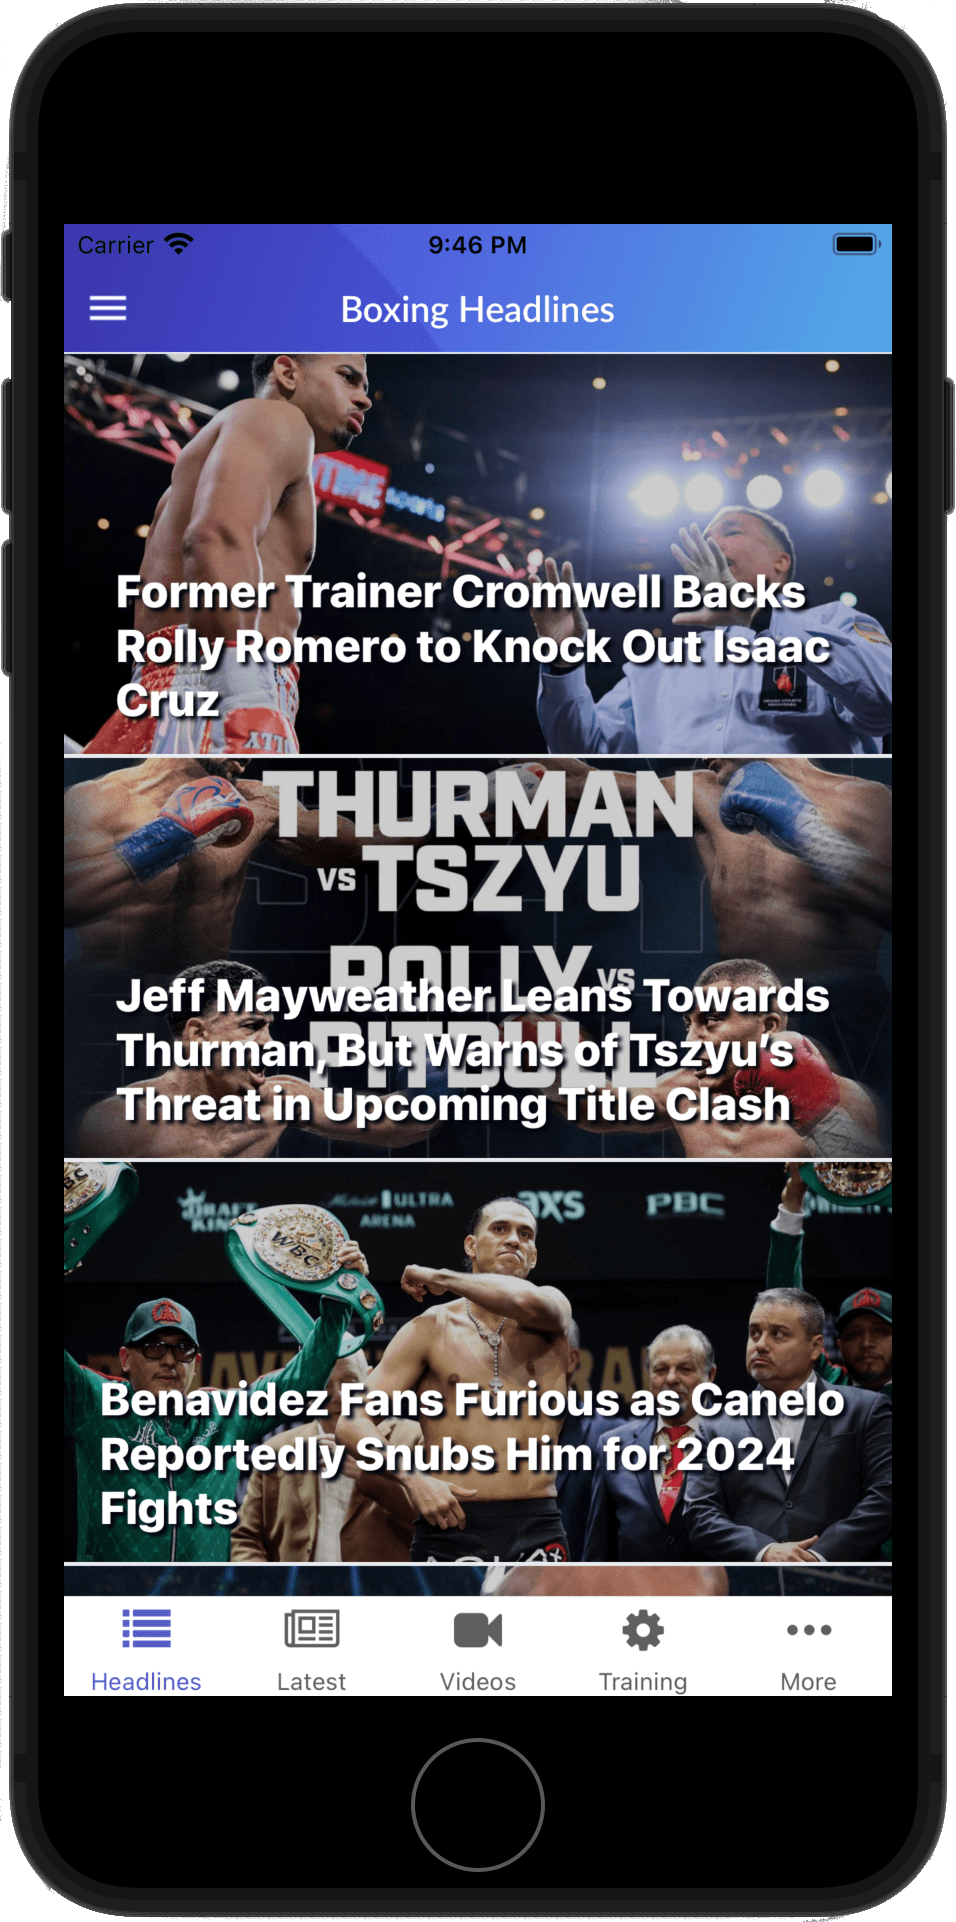 boxing headlines image